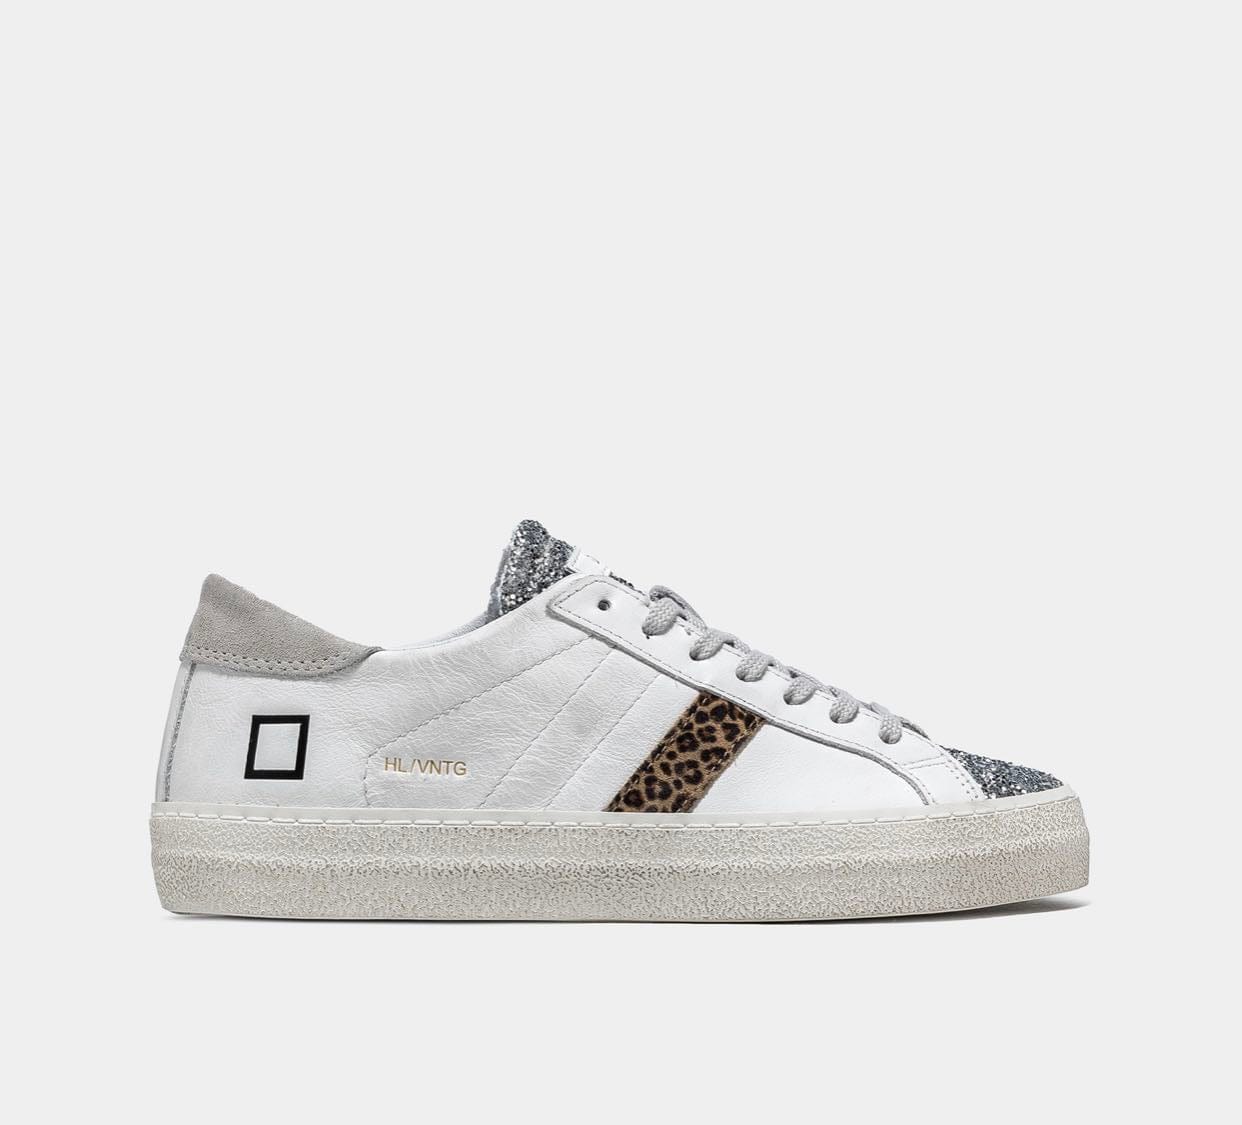 Date sneakers donna hill low vintage calf white leopard con glitter